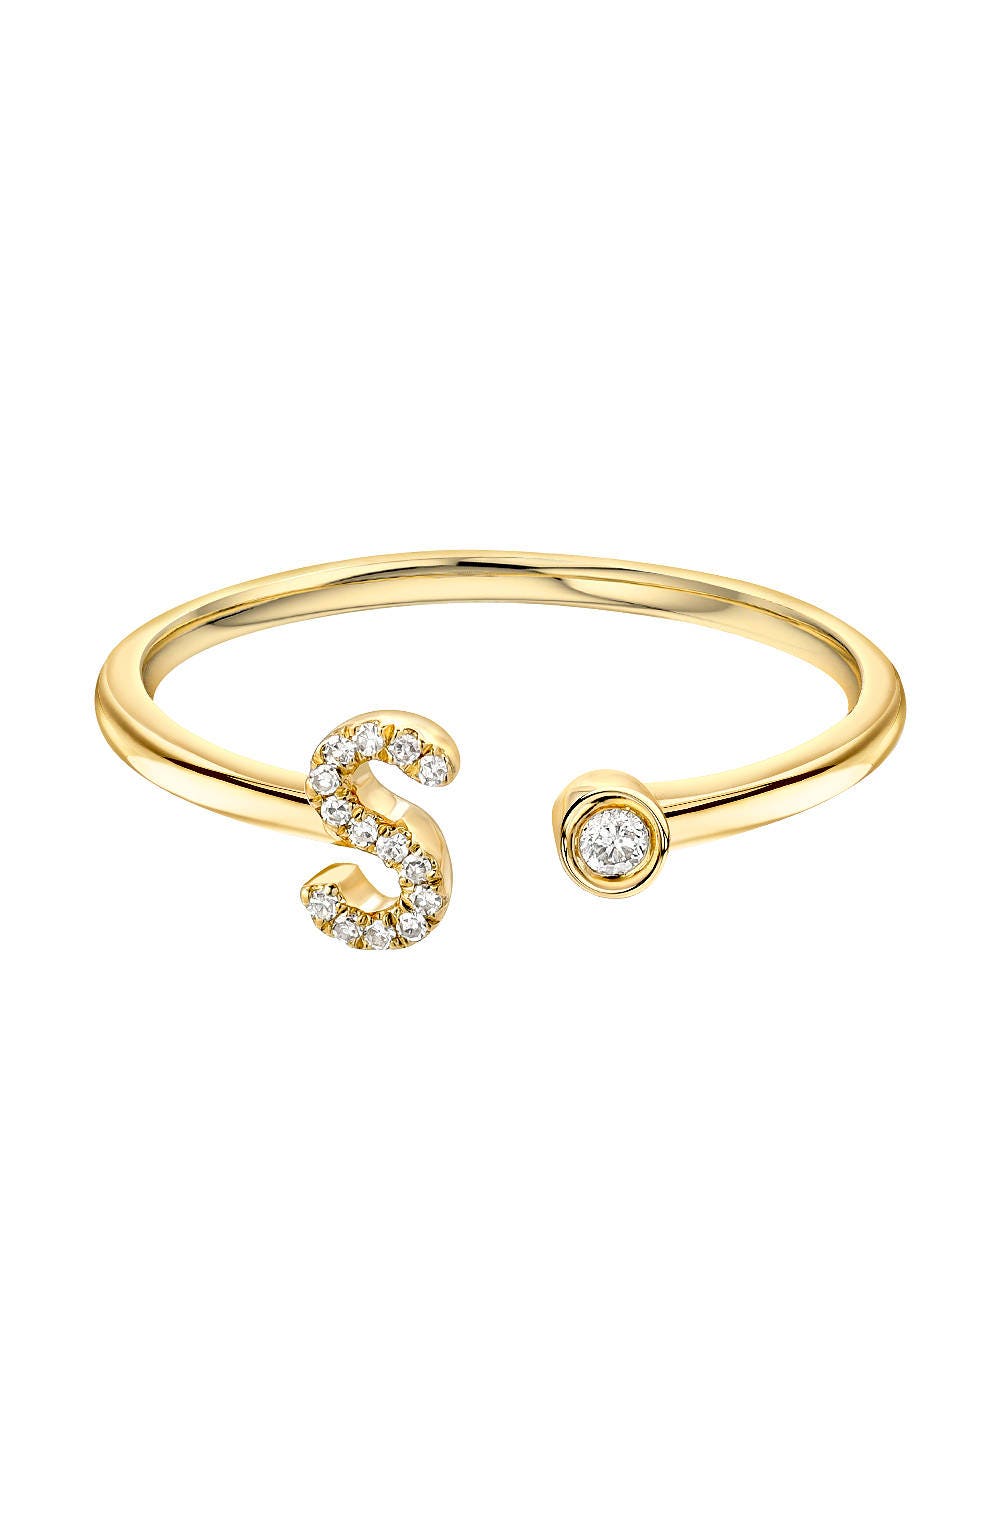 Diamond letter ring with bezel 14k solid gold diamond | Etsy